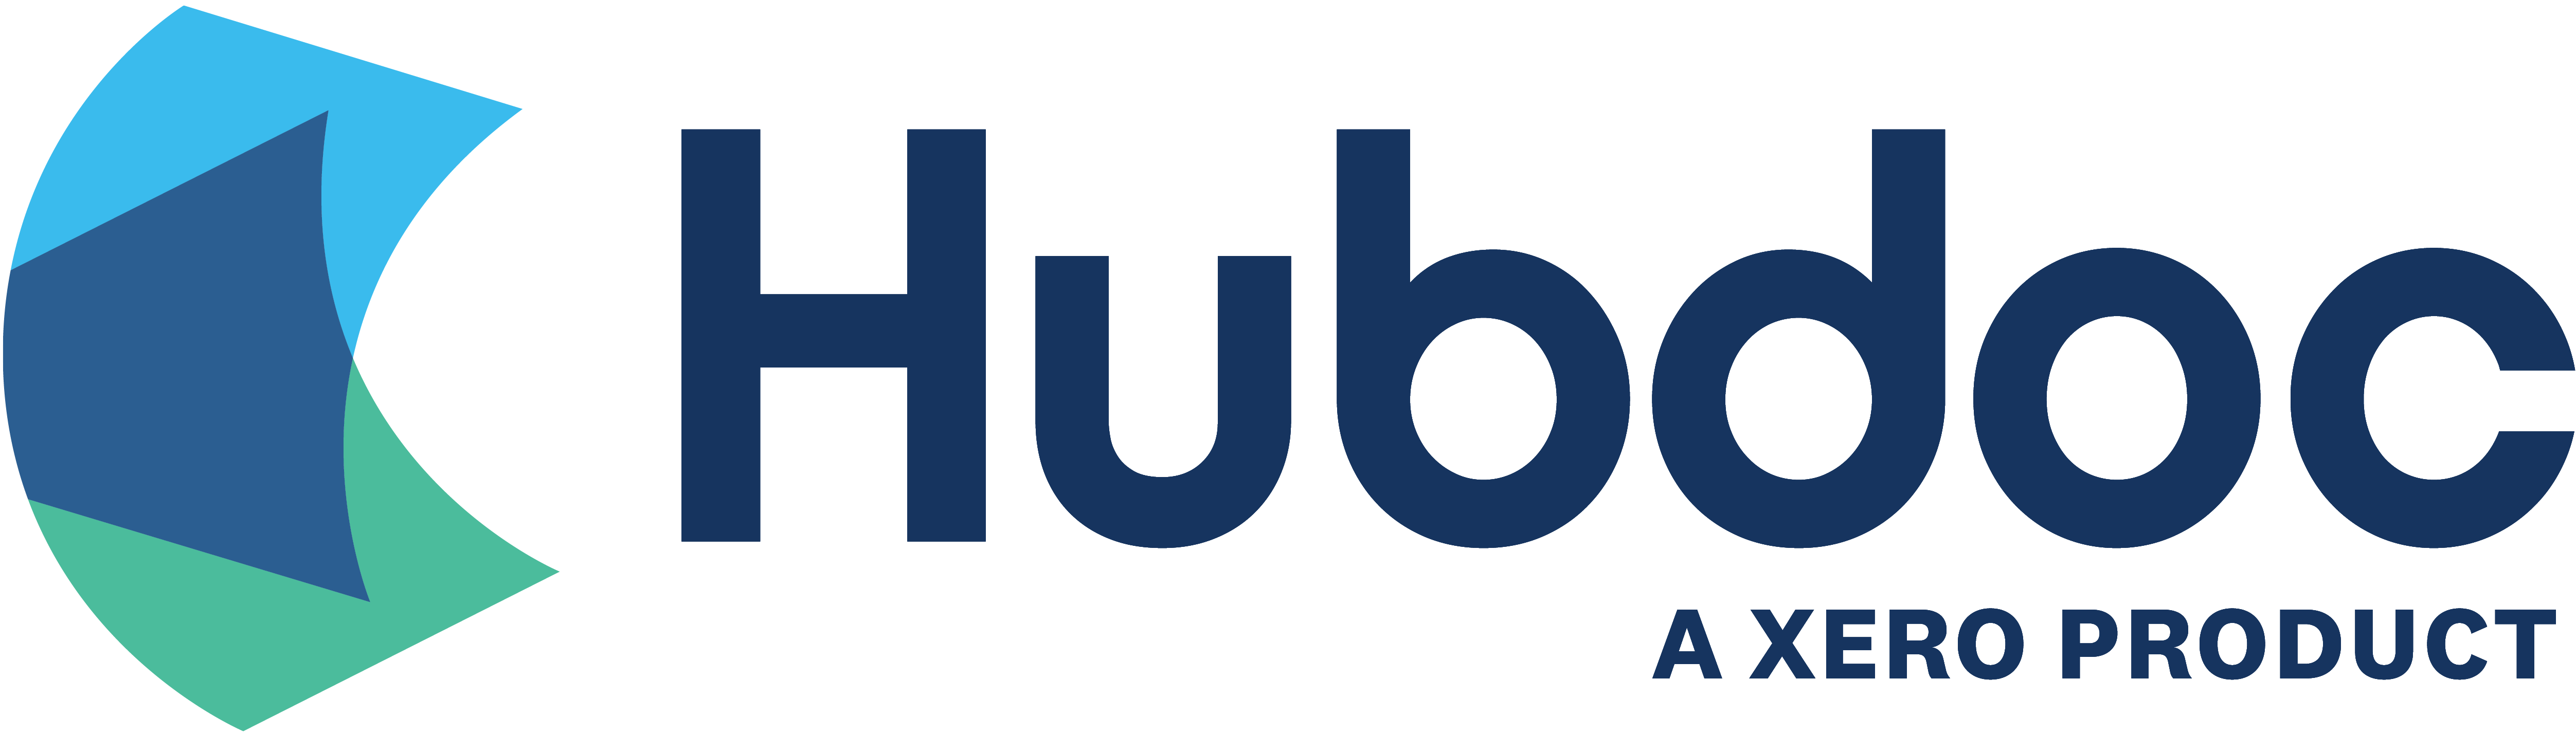 Hubdoc_partner_logo